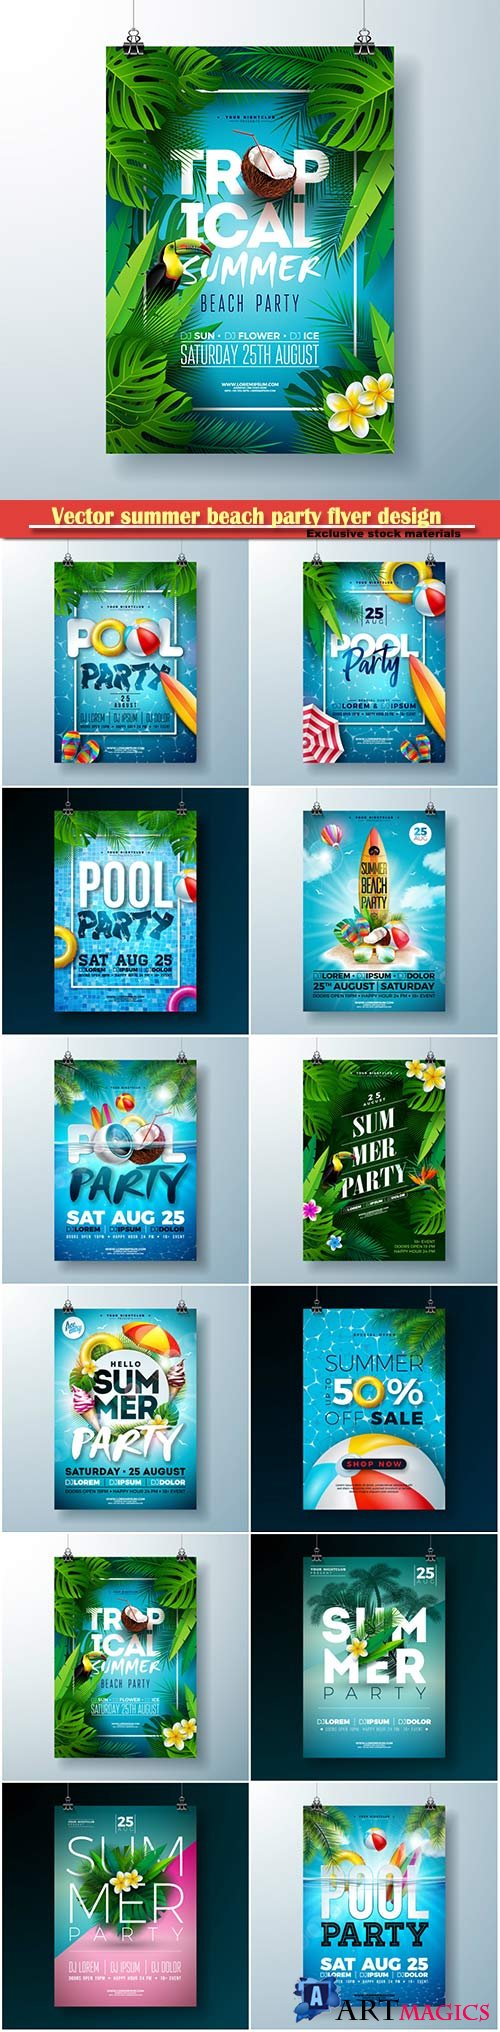 Vector summer beach party flyer design # 3